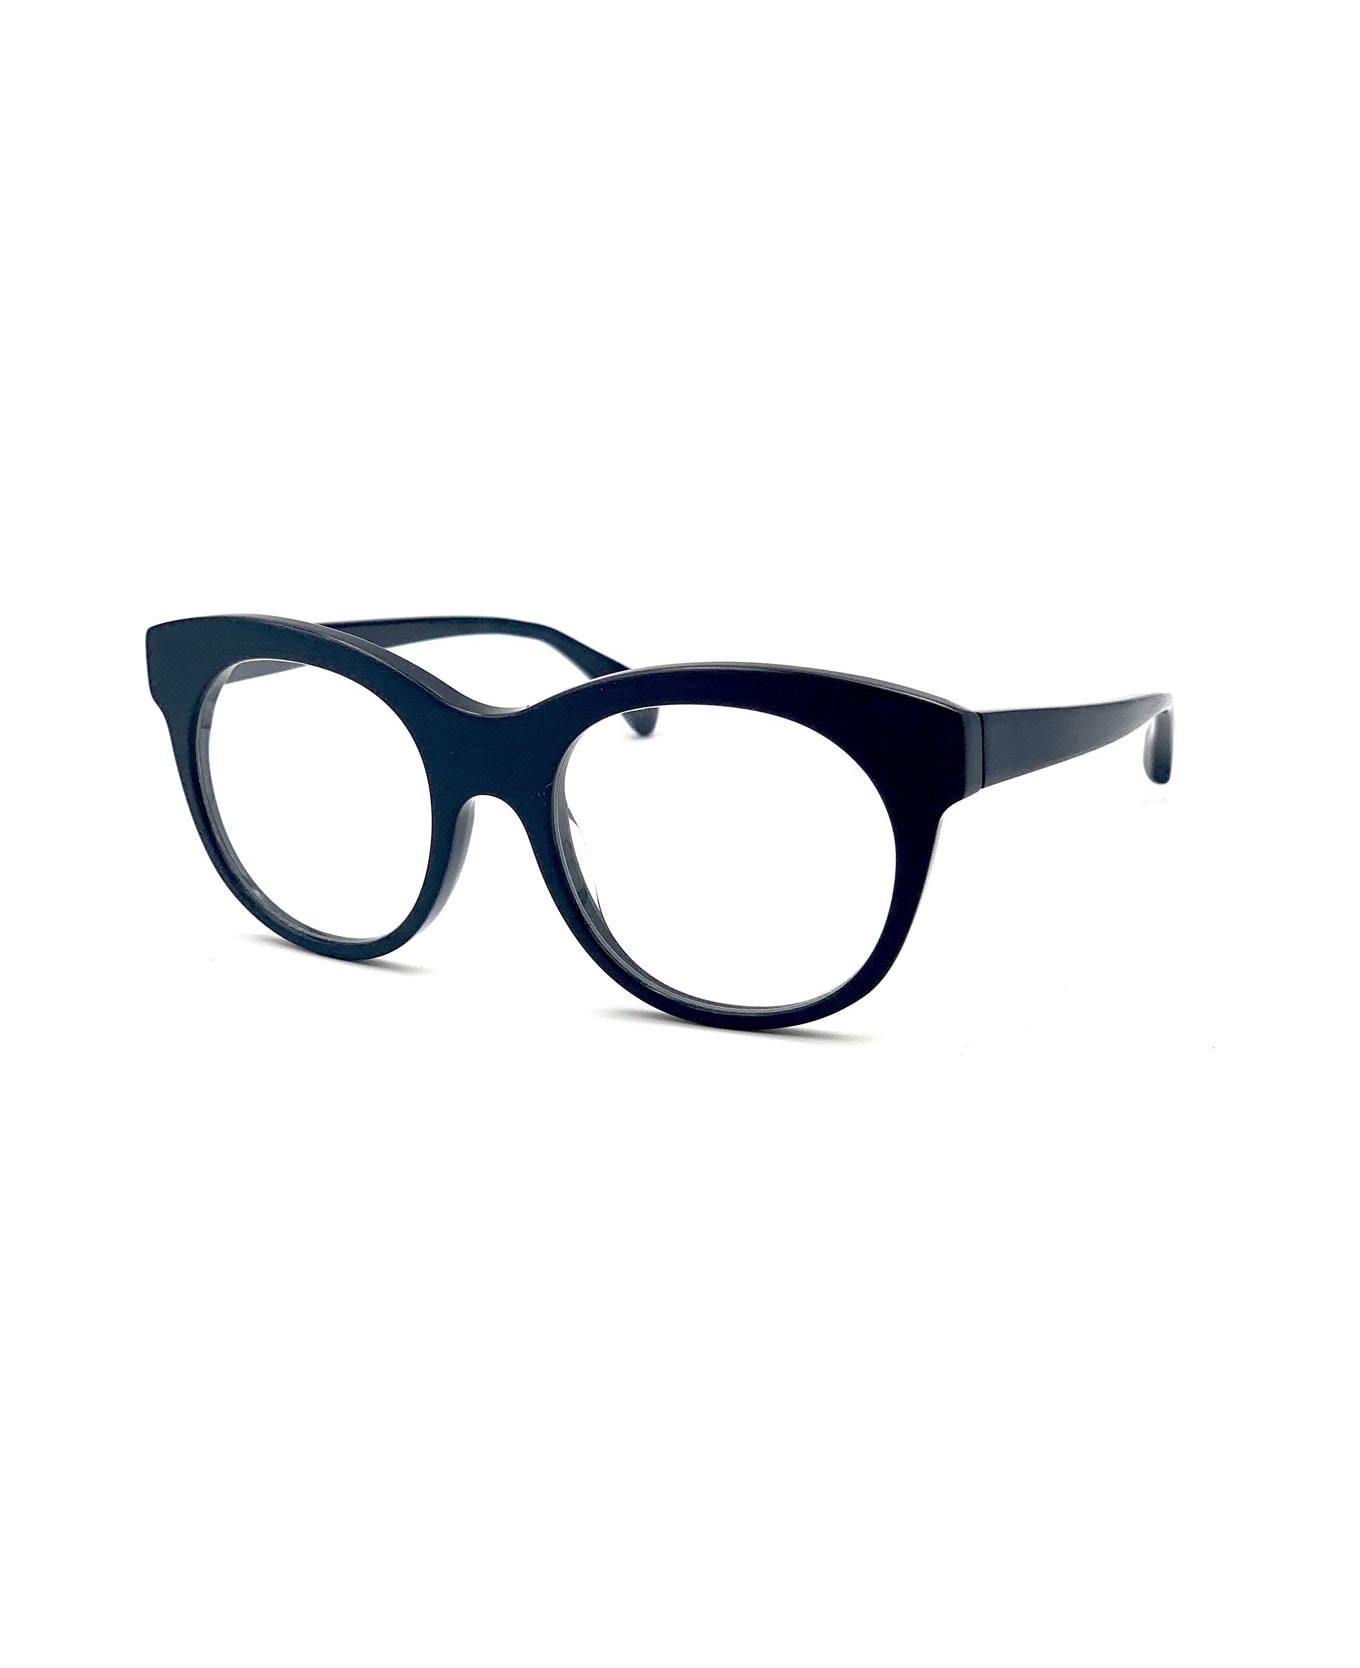 Jacques Durand Port-cros Xl170 Glasses - Nero